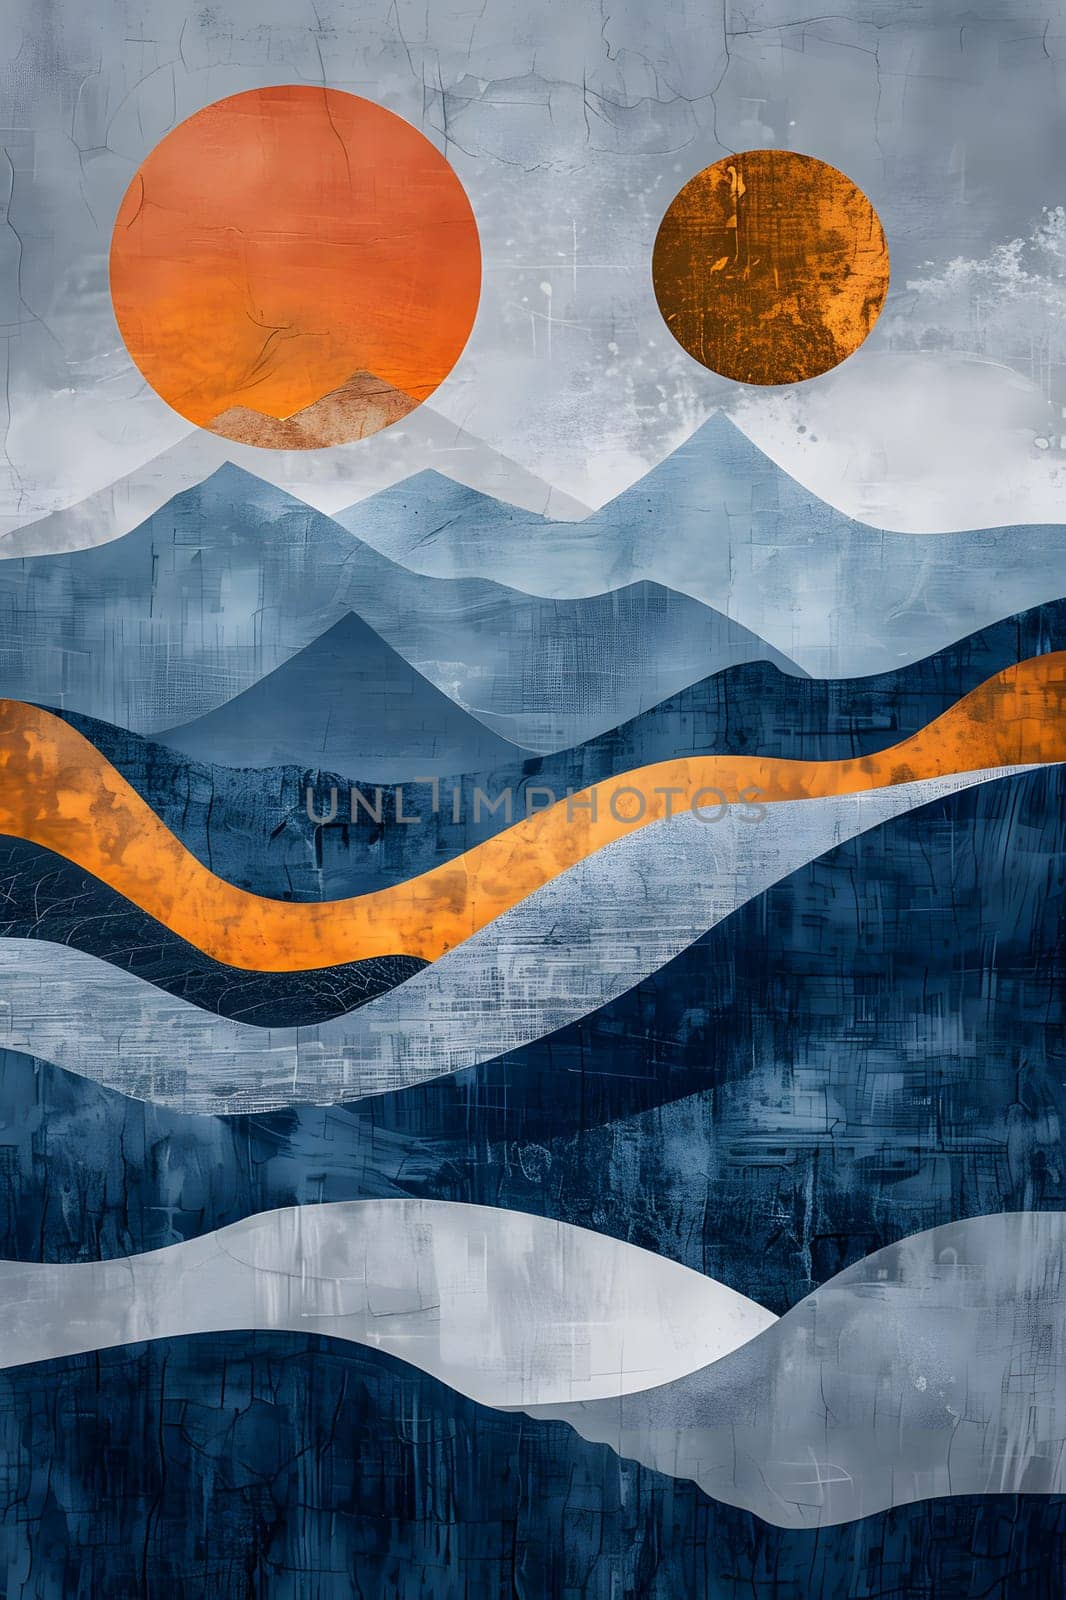 Ecoregion painting with azure waves, orange suns, and mountain landscape by Nadtochiy